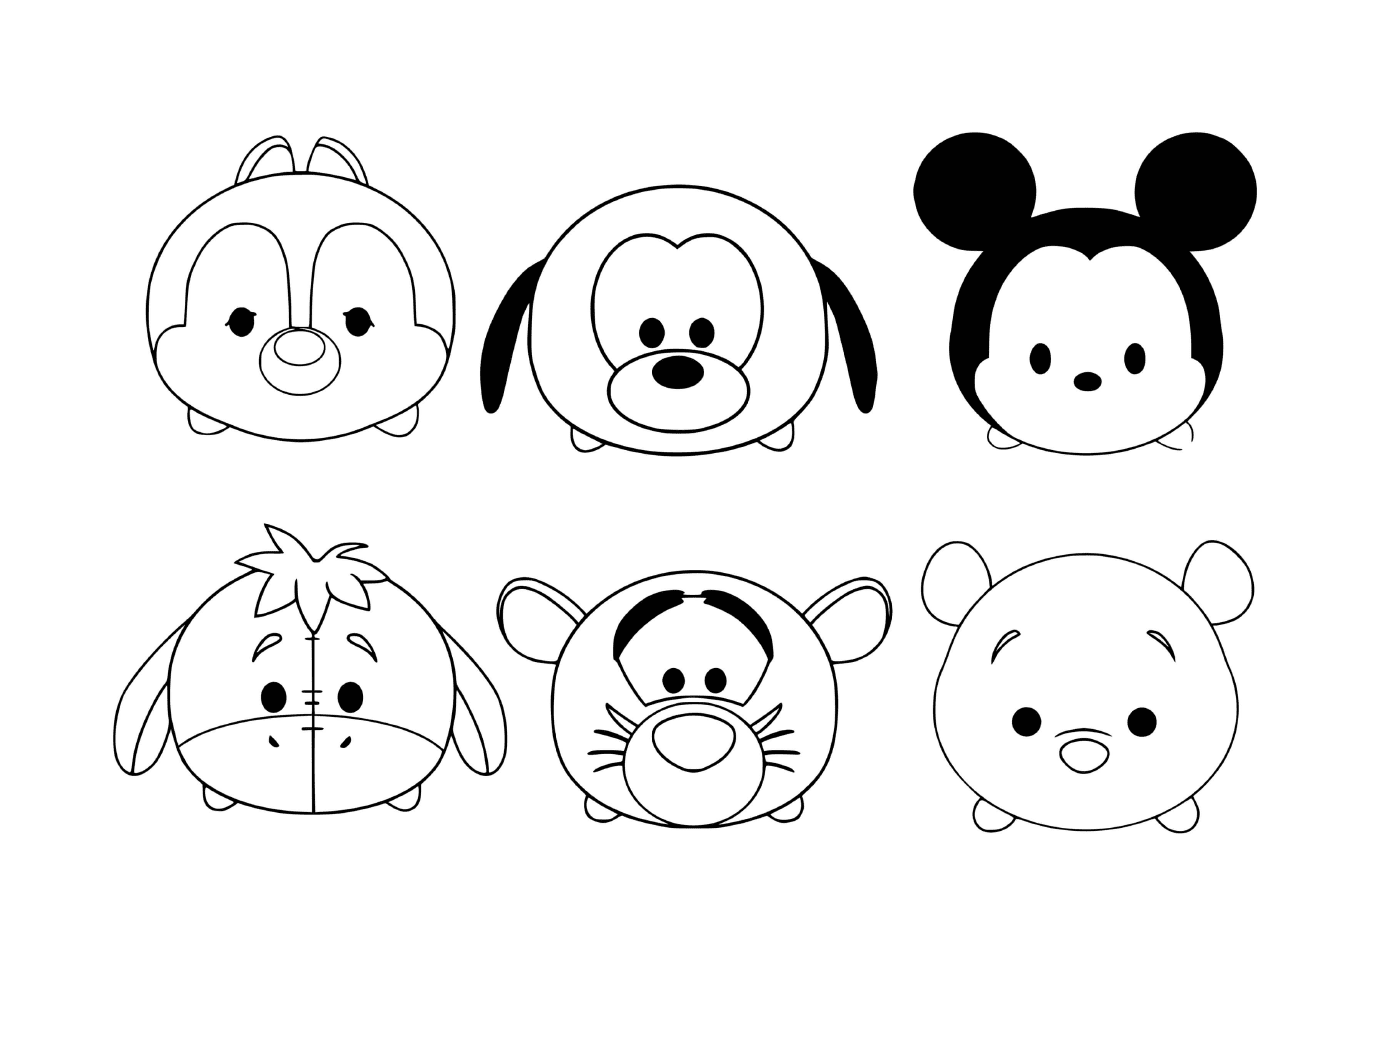  Disney Tsum Tsum characters easy to draw 